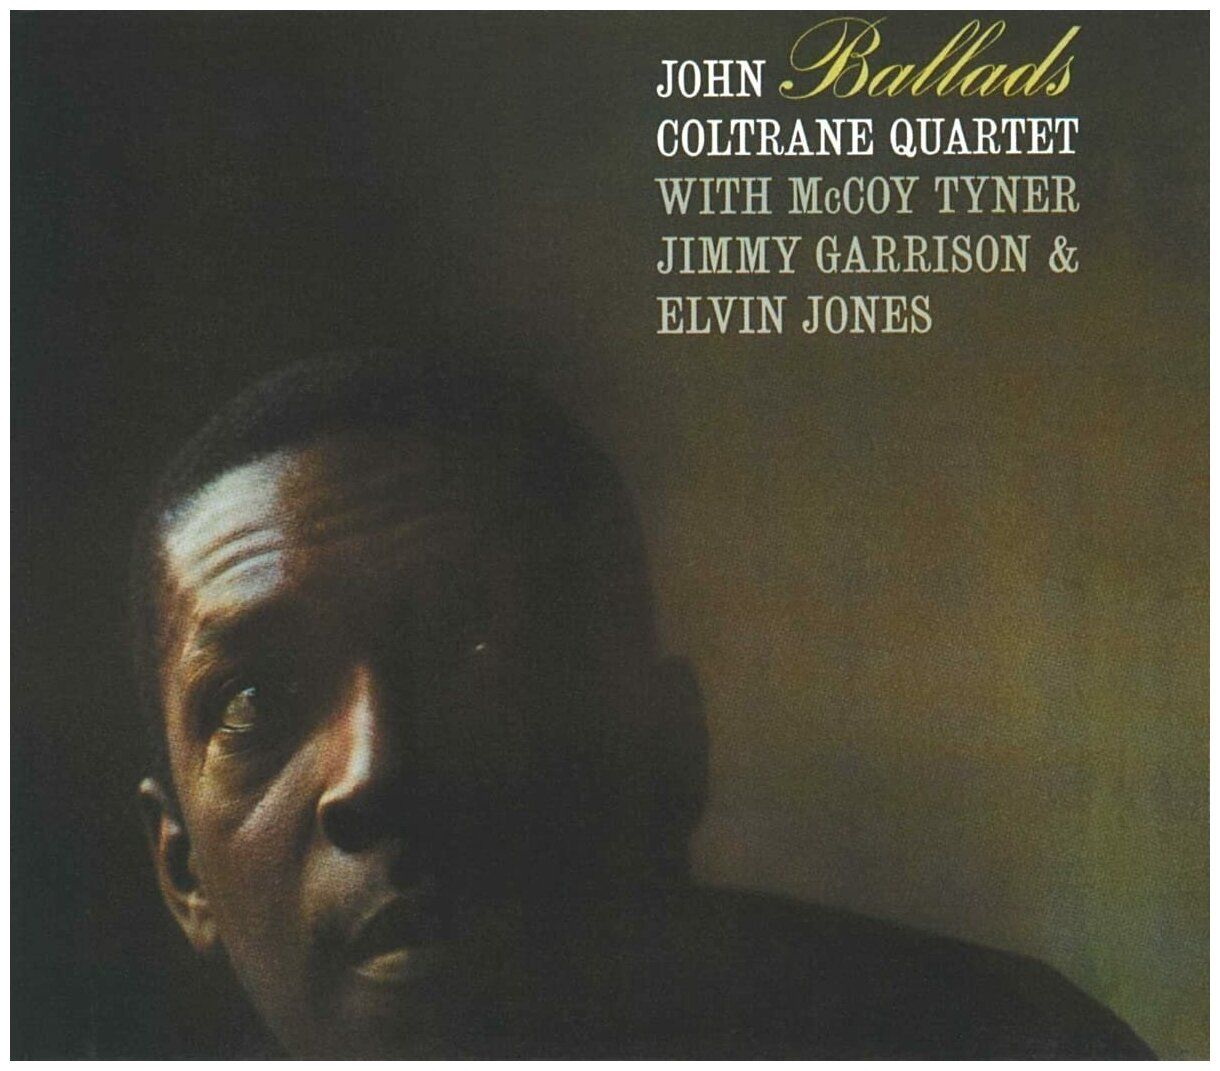 0011105015615, Виниловая пластинка Coltrane, John, Ballads coltrane john виниловая пластинка coltrane john ballads